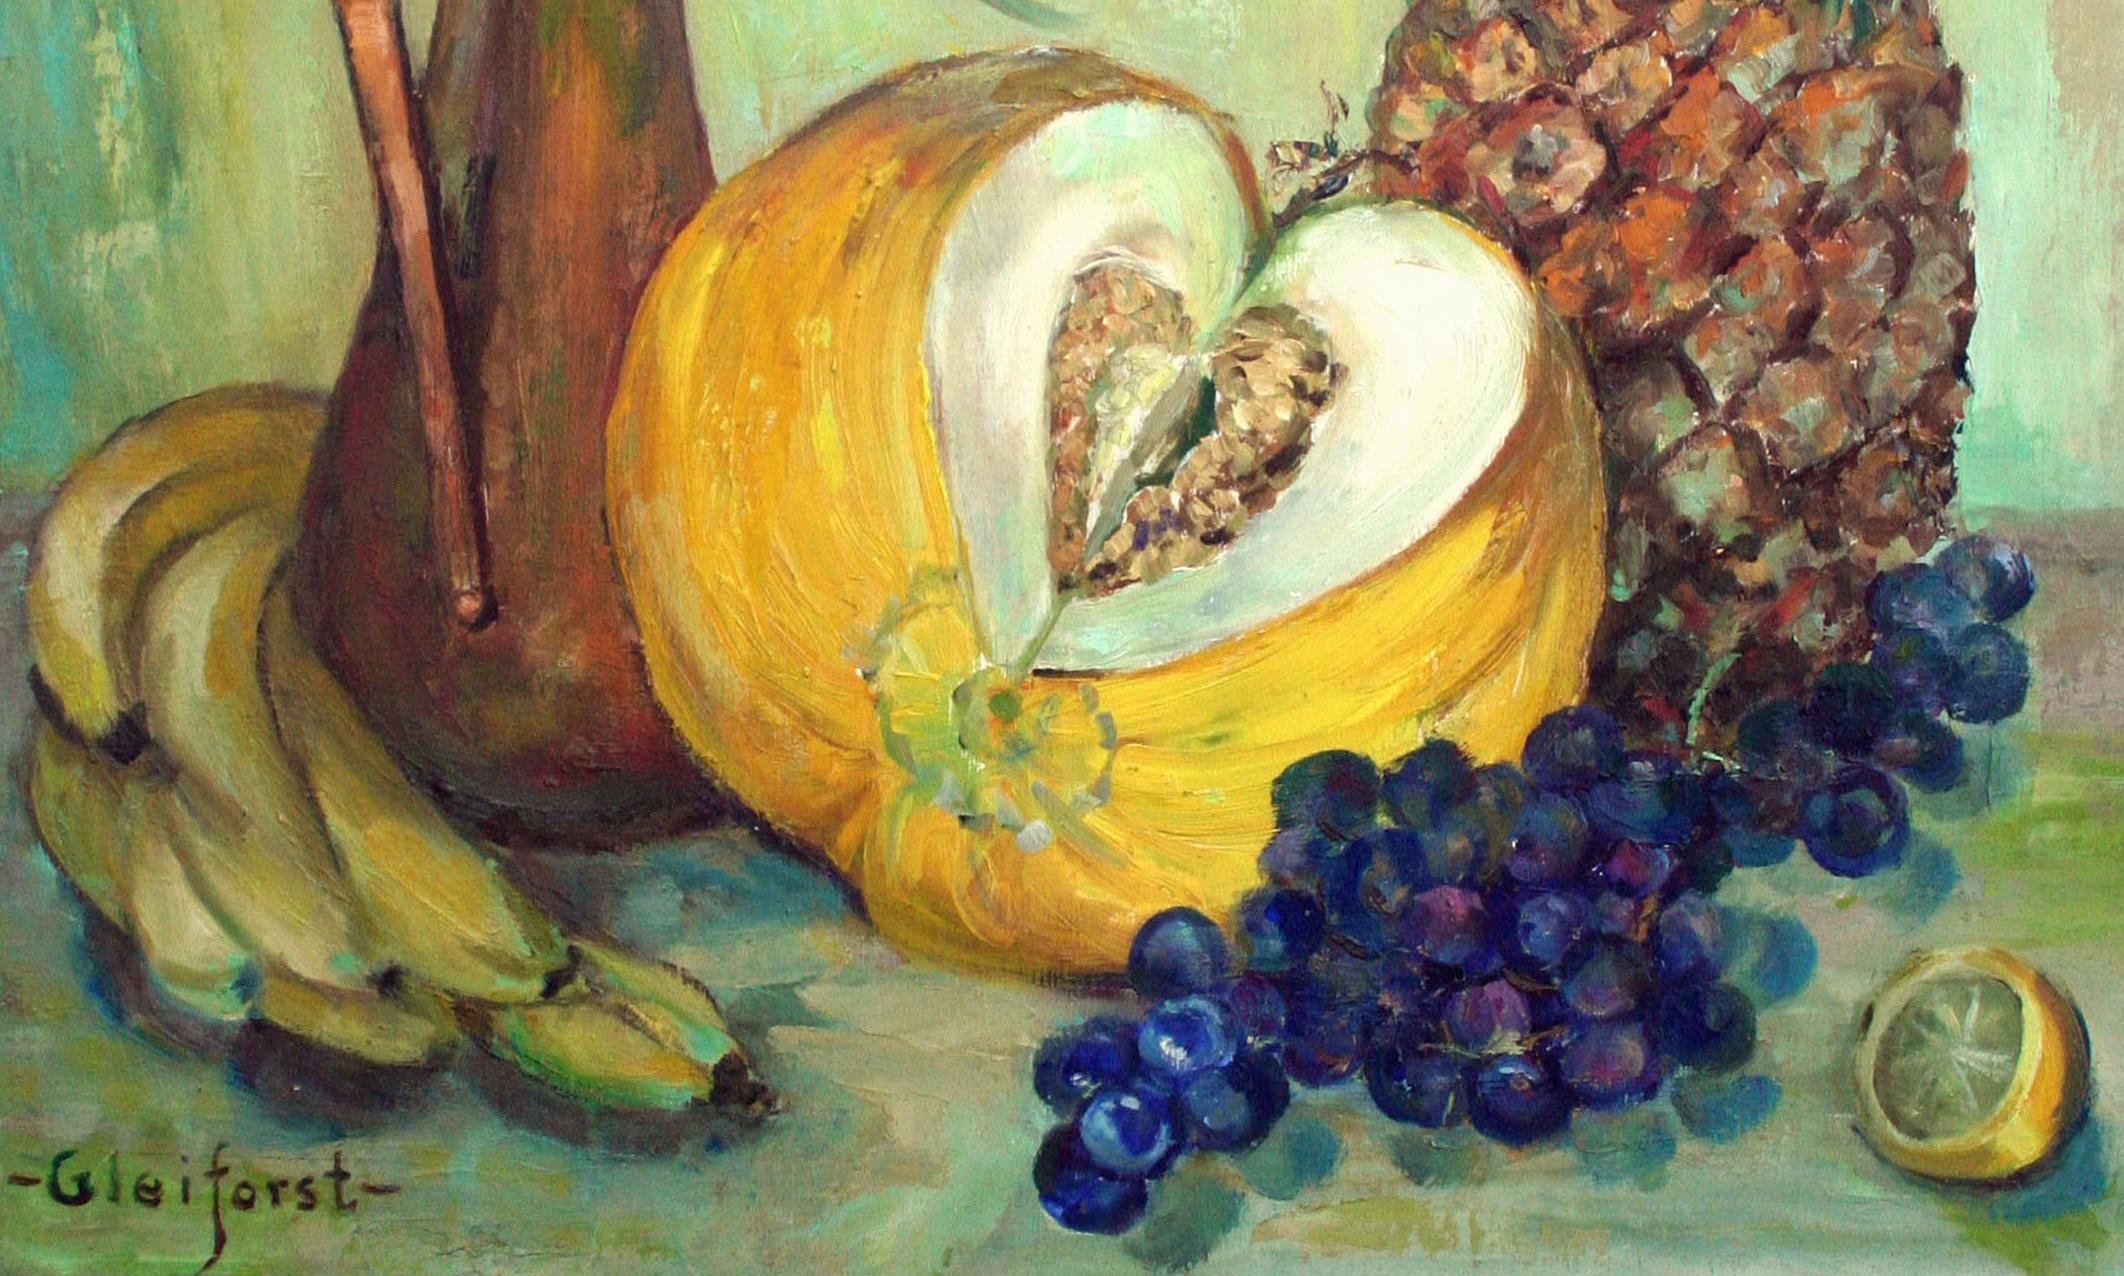 Vase of Strawflowers & Fruit, Mid Century Still Life - American Impressionist Painting by Helen Enoch Gleiforst